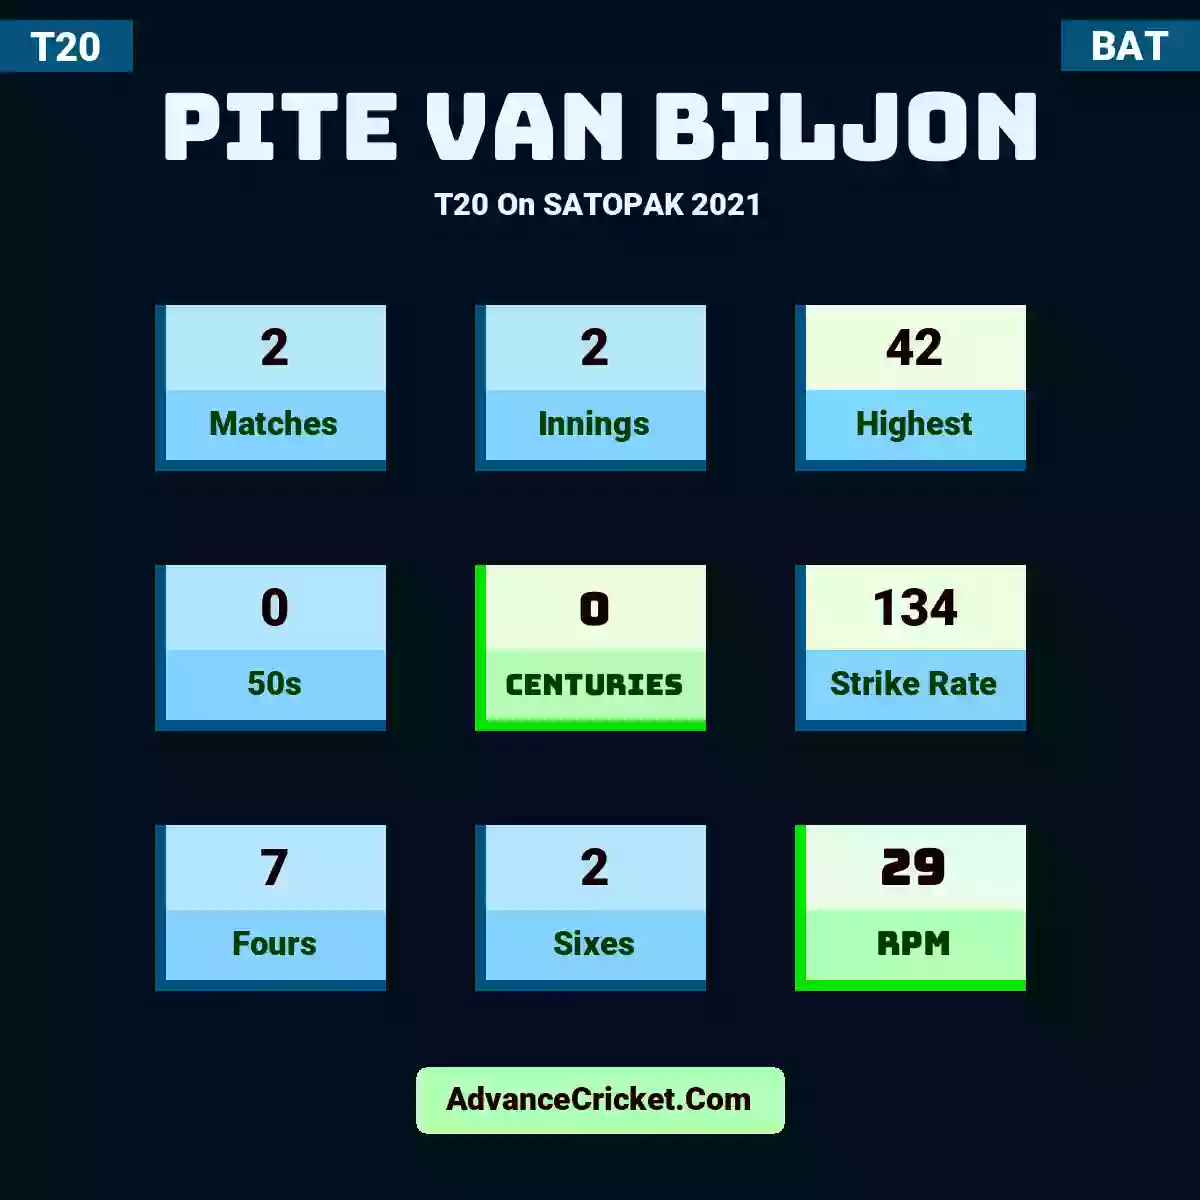 Pite van Biljon T20  On SATOPAK 2021, Pite van Biljon played 2 matches, scored 42 runs as highest, 0 half-centuries, and 0 centuries, with a strike rate of 134. P.van Biljon hit 7 fours and 2 sixes, with an RPM of 29.